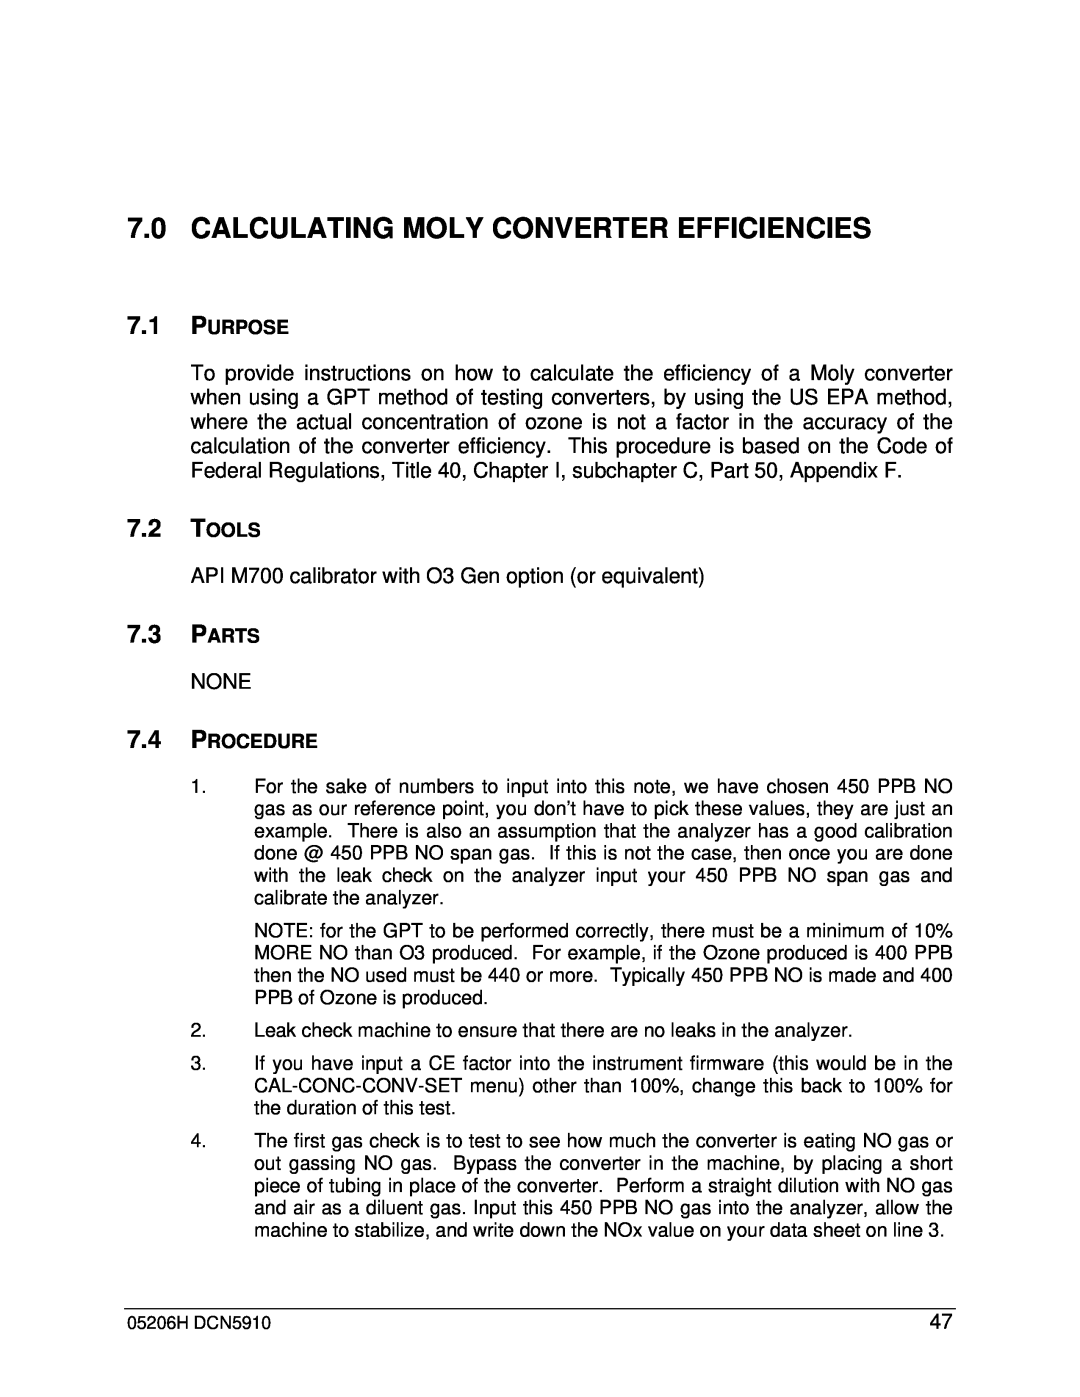 Teledyne M201E manual 7.0CALCULATING MOLY CONVERTER EFFICIENCIES, None 